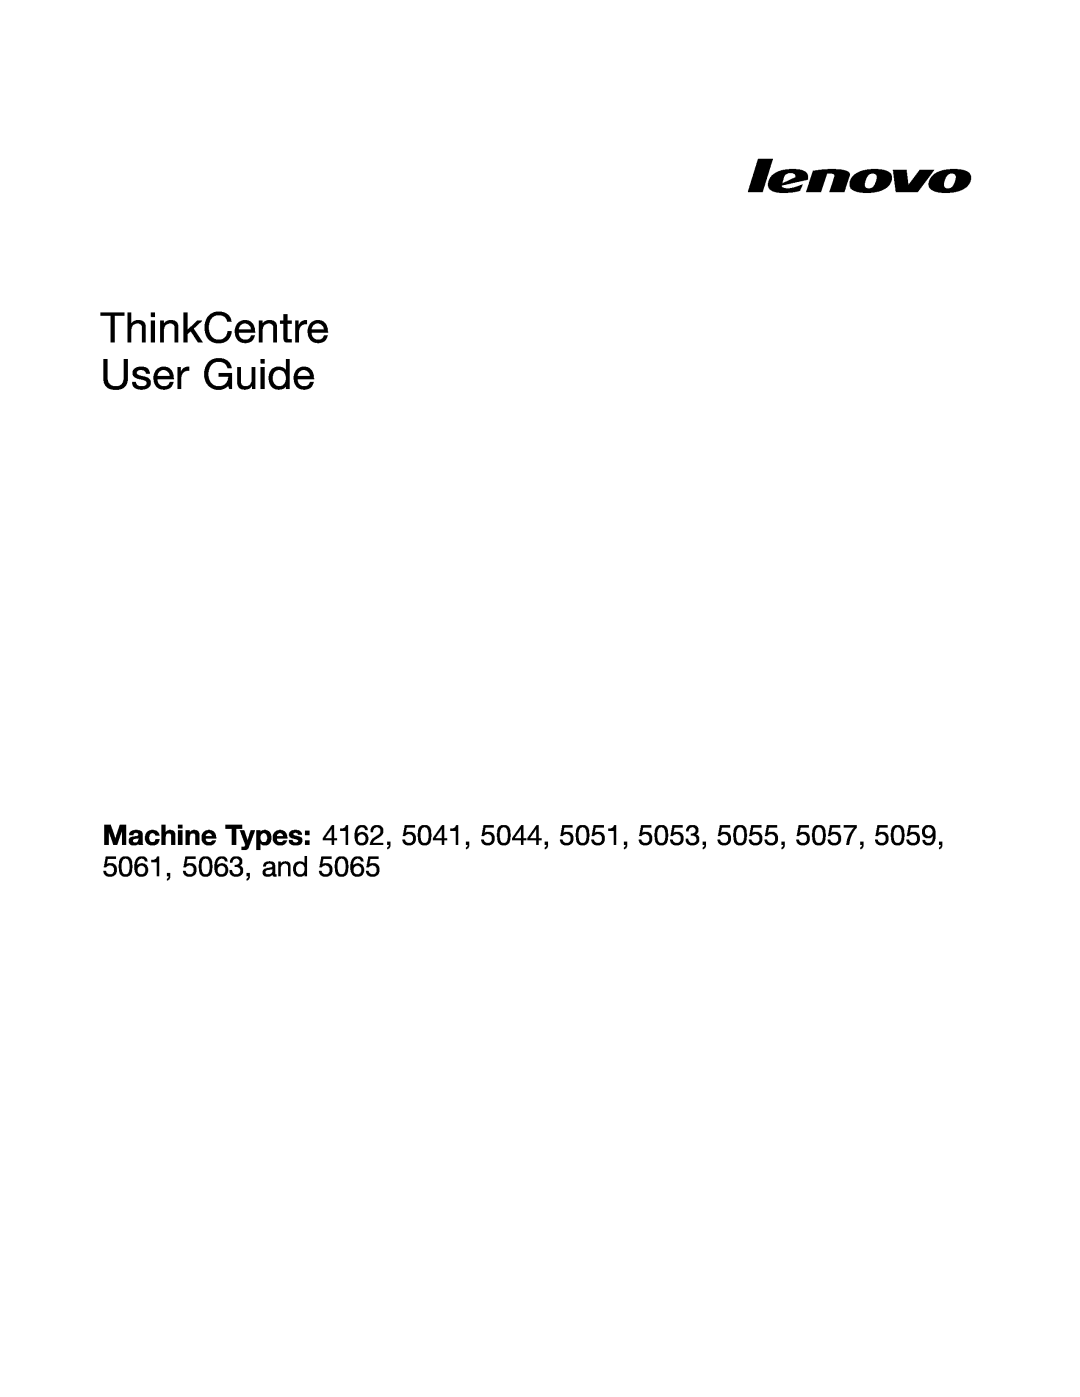 Lenovo 5053, 5063, 5065, 5059, 5044, 5061, 5041, 5051, 5055, 5057, 4162 manual ThinkCentre User Guide 